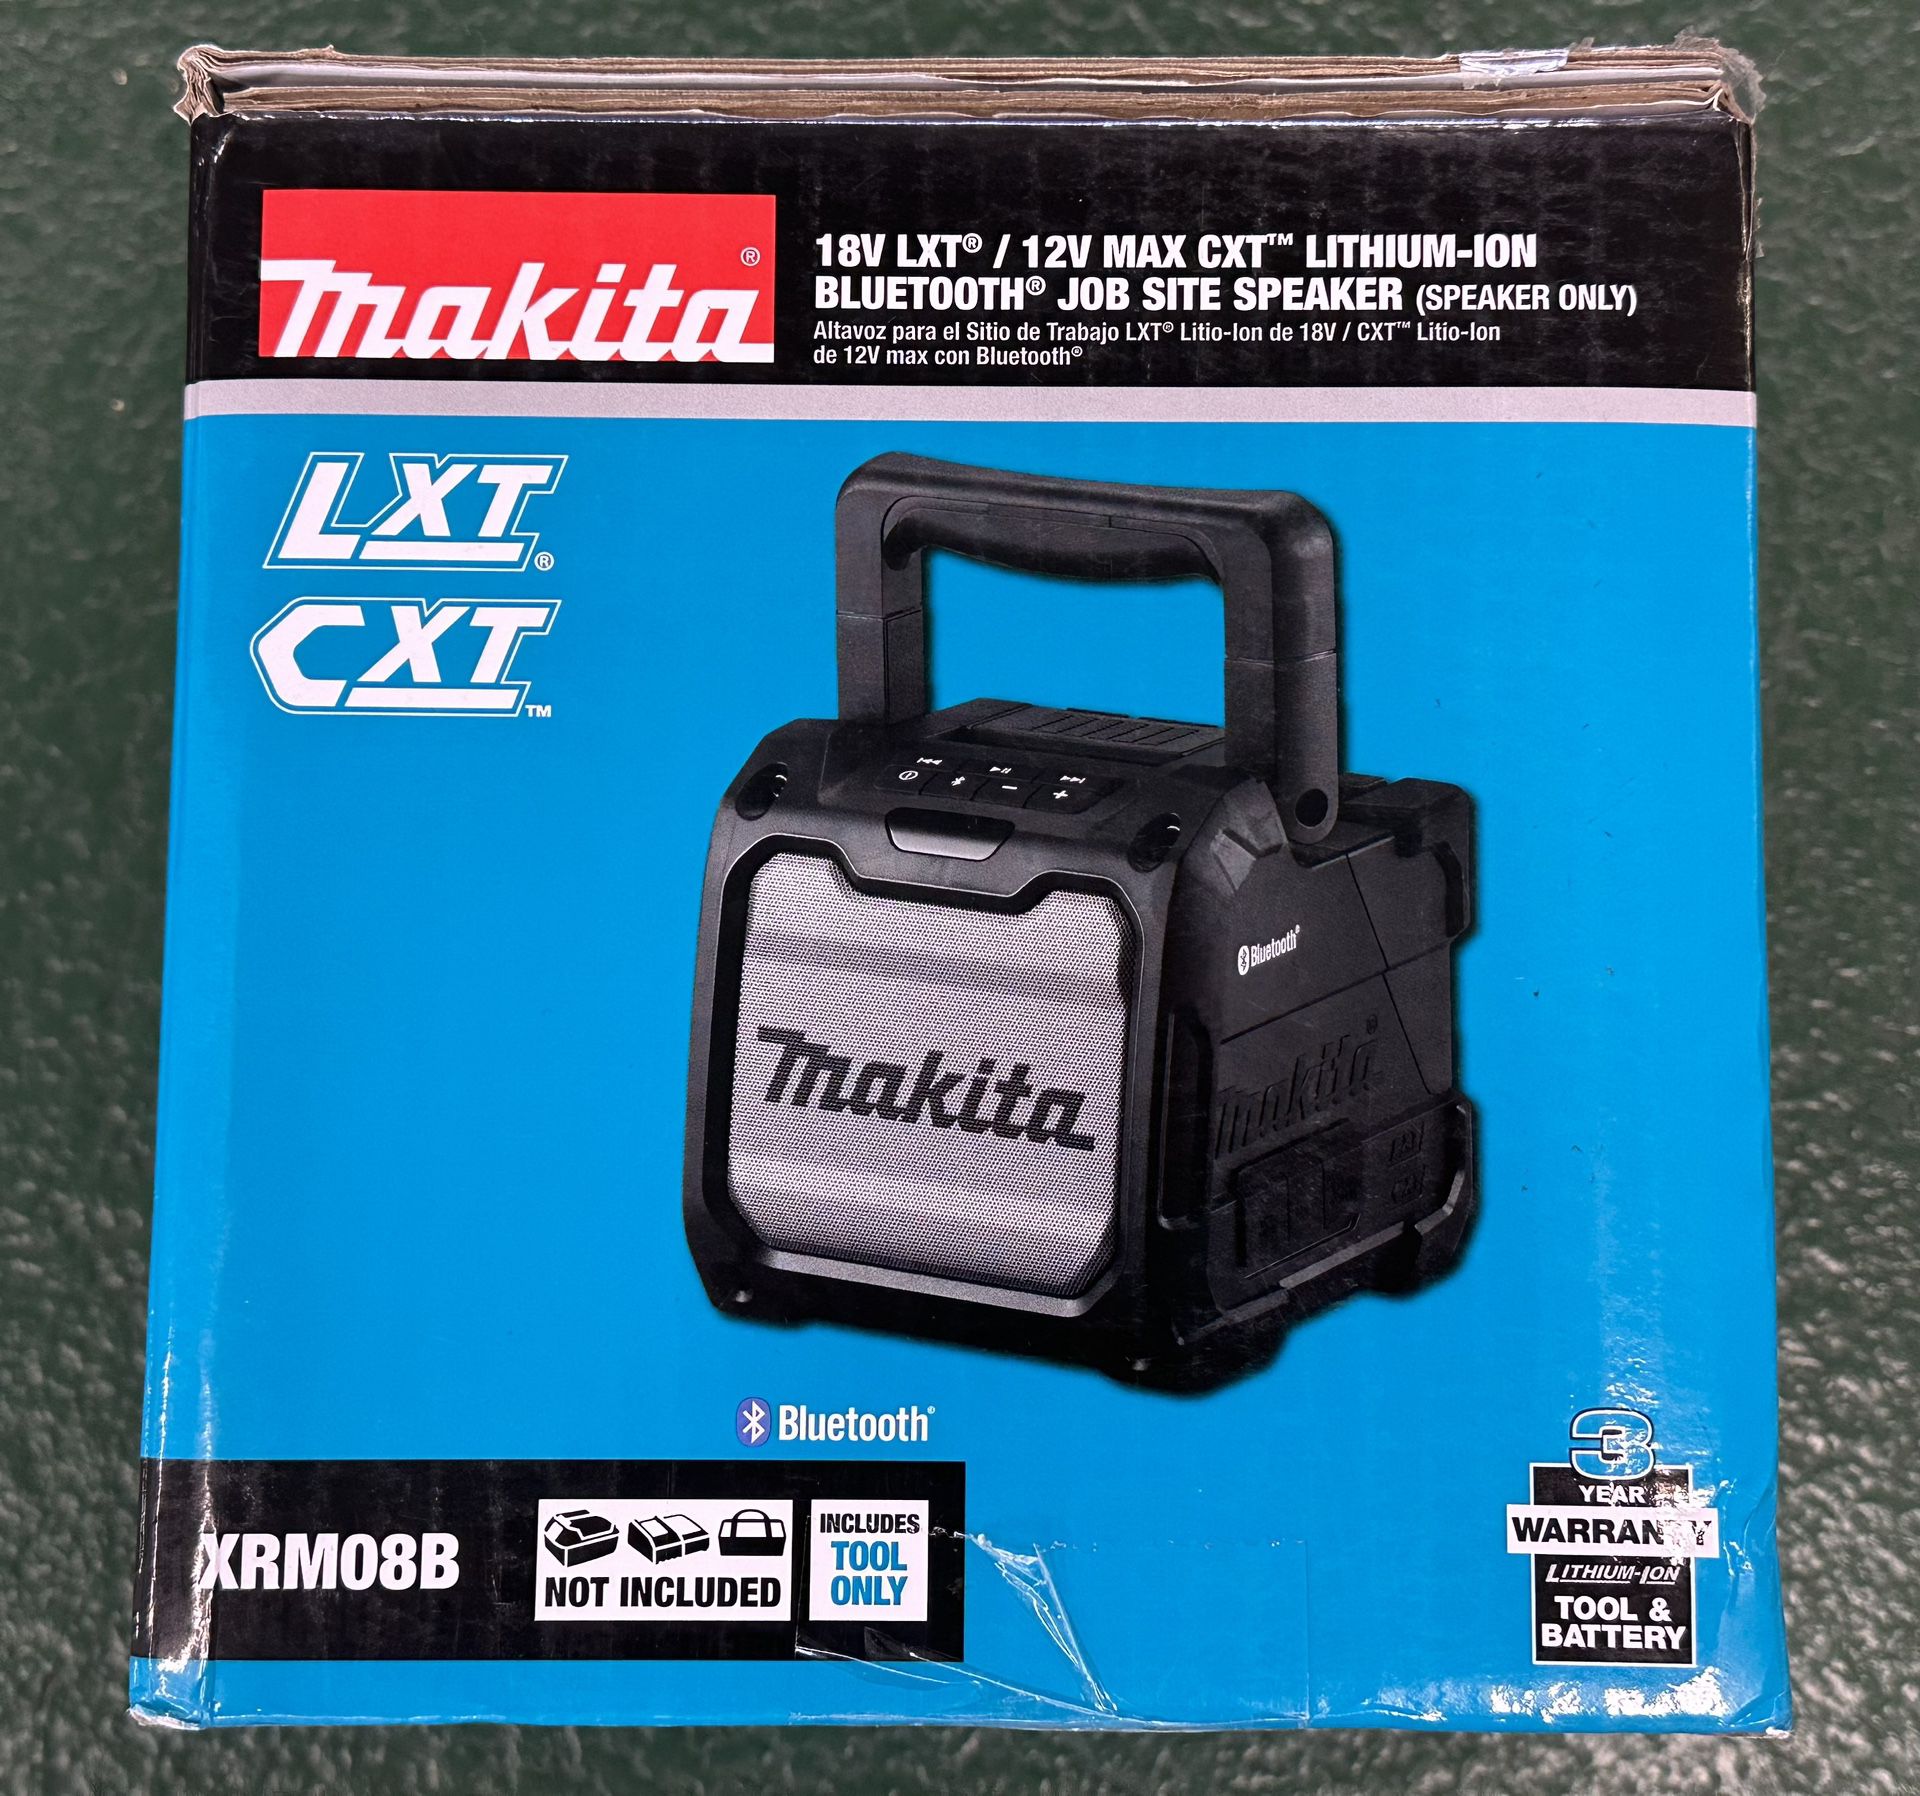 NEW! Makita XRM08B 12V/18V Max CXT Bluetooth Job Site Speaker